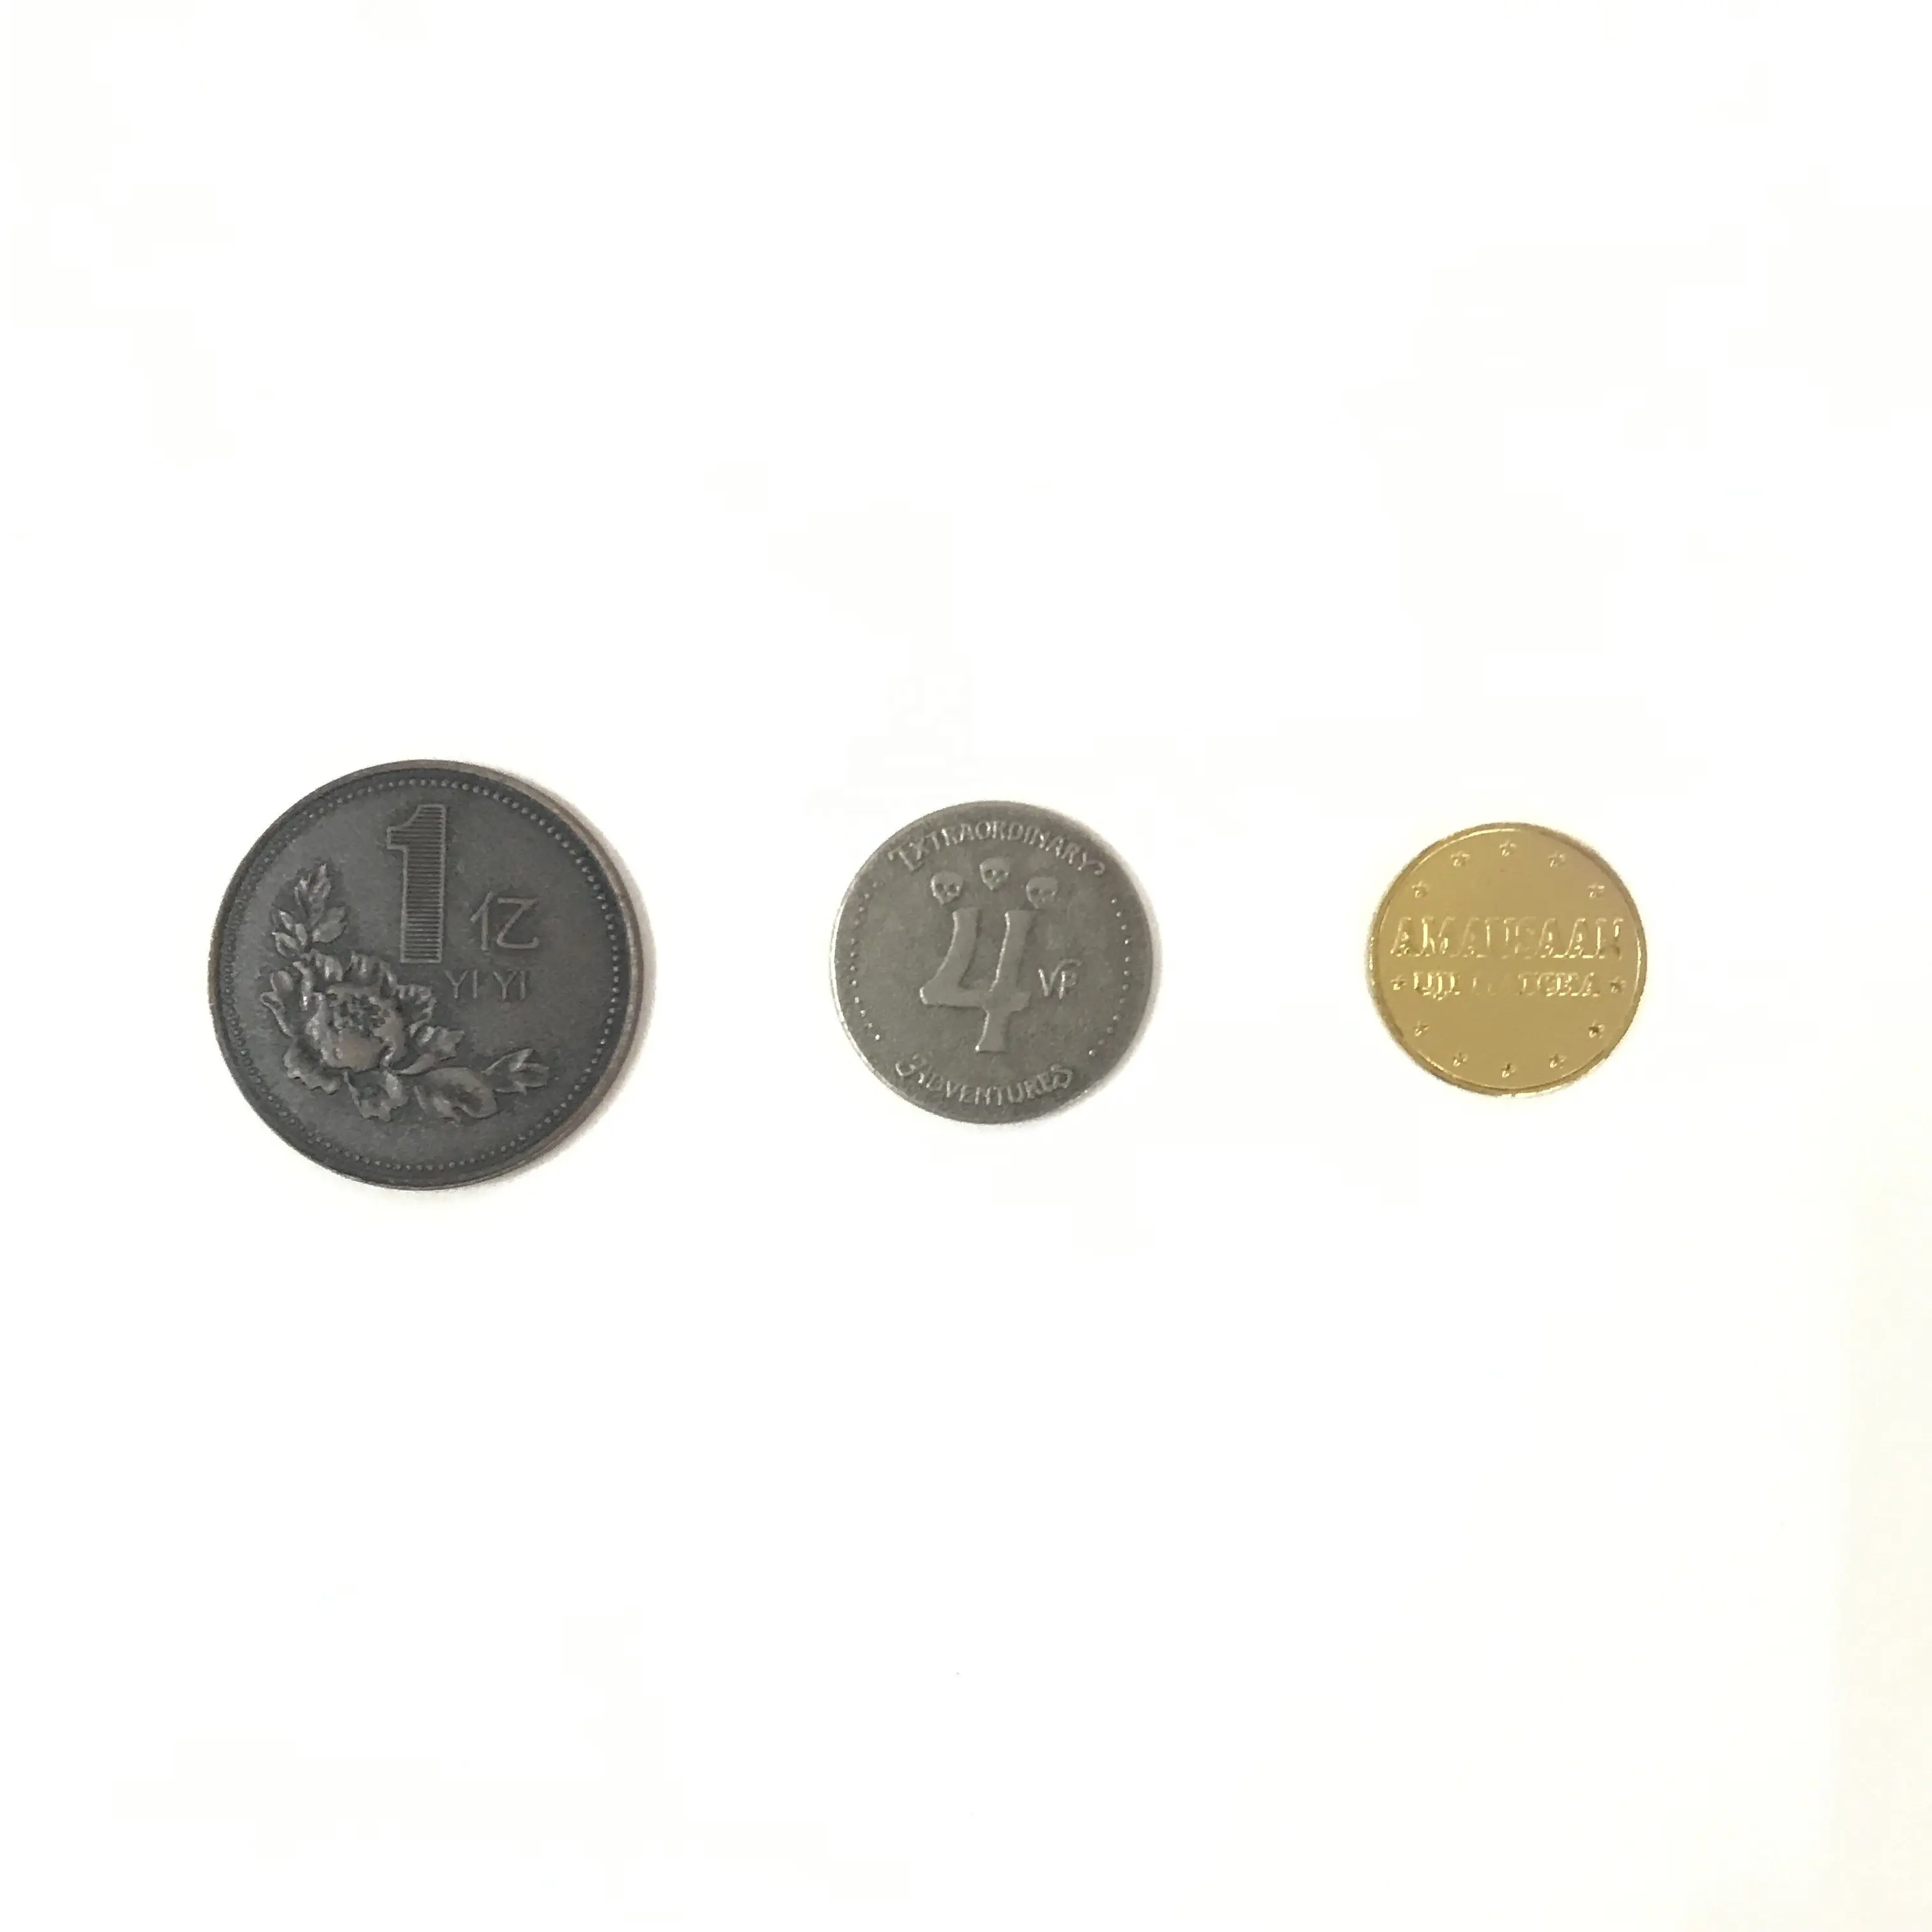 Professional custom metal coin badge medal commemorative coin